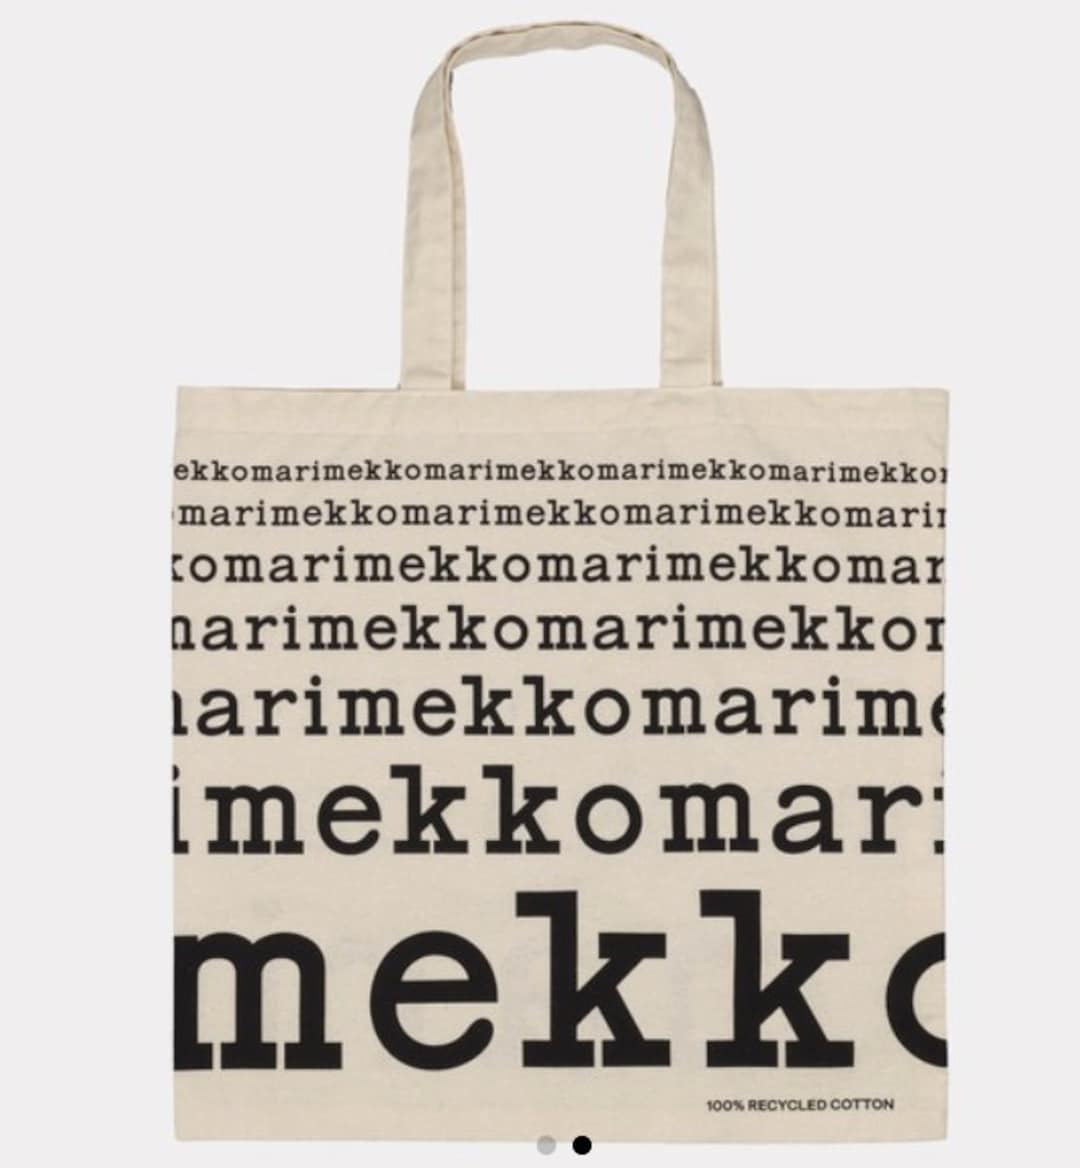 Marimekko Logo Tote Bag New Design Made by Marimekko - Etsy